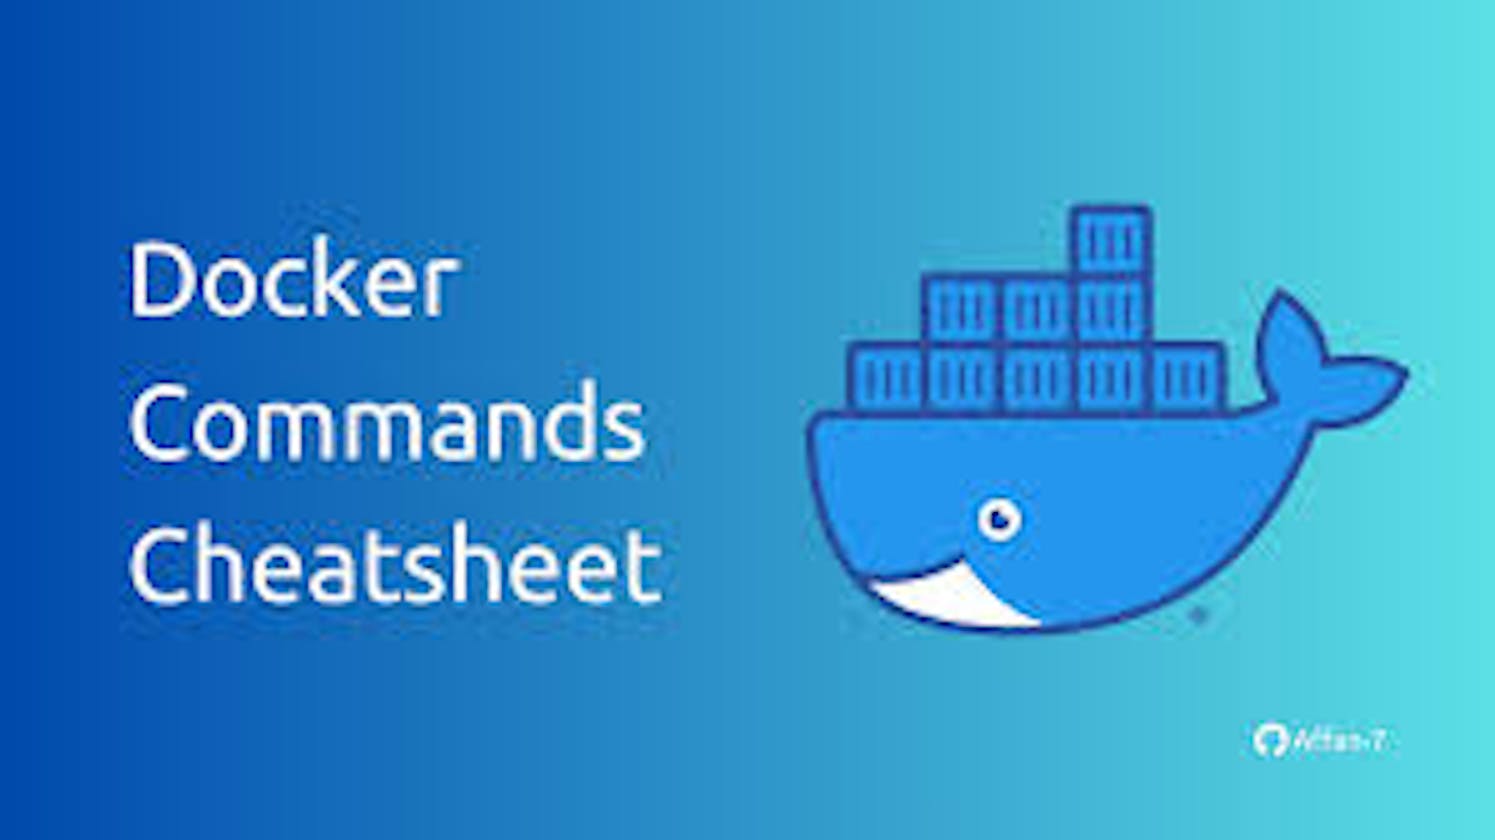 Docker Commands Cheatsheet.